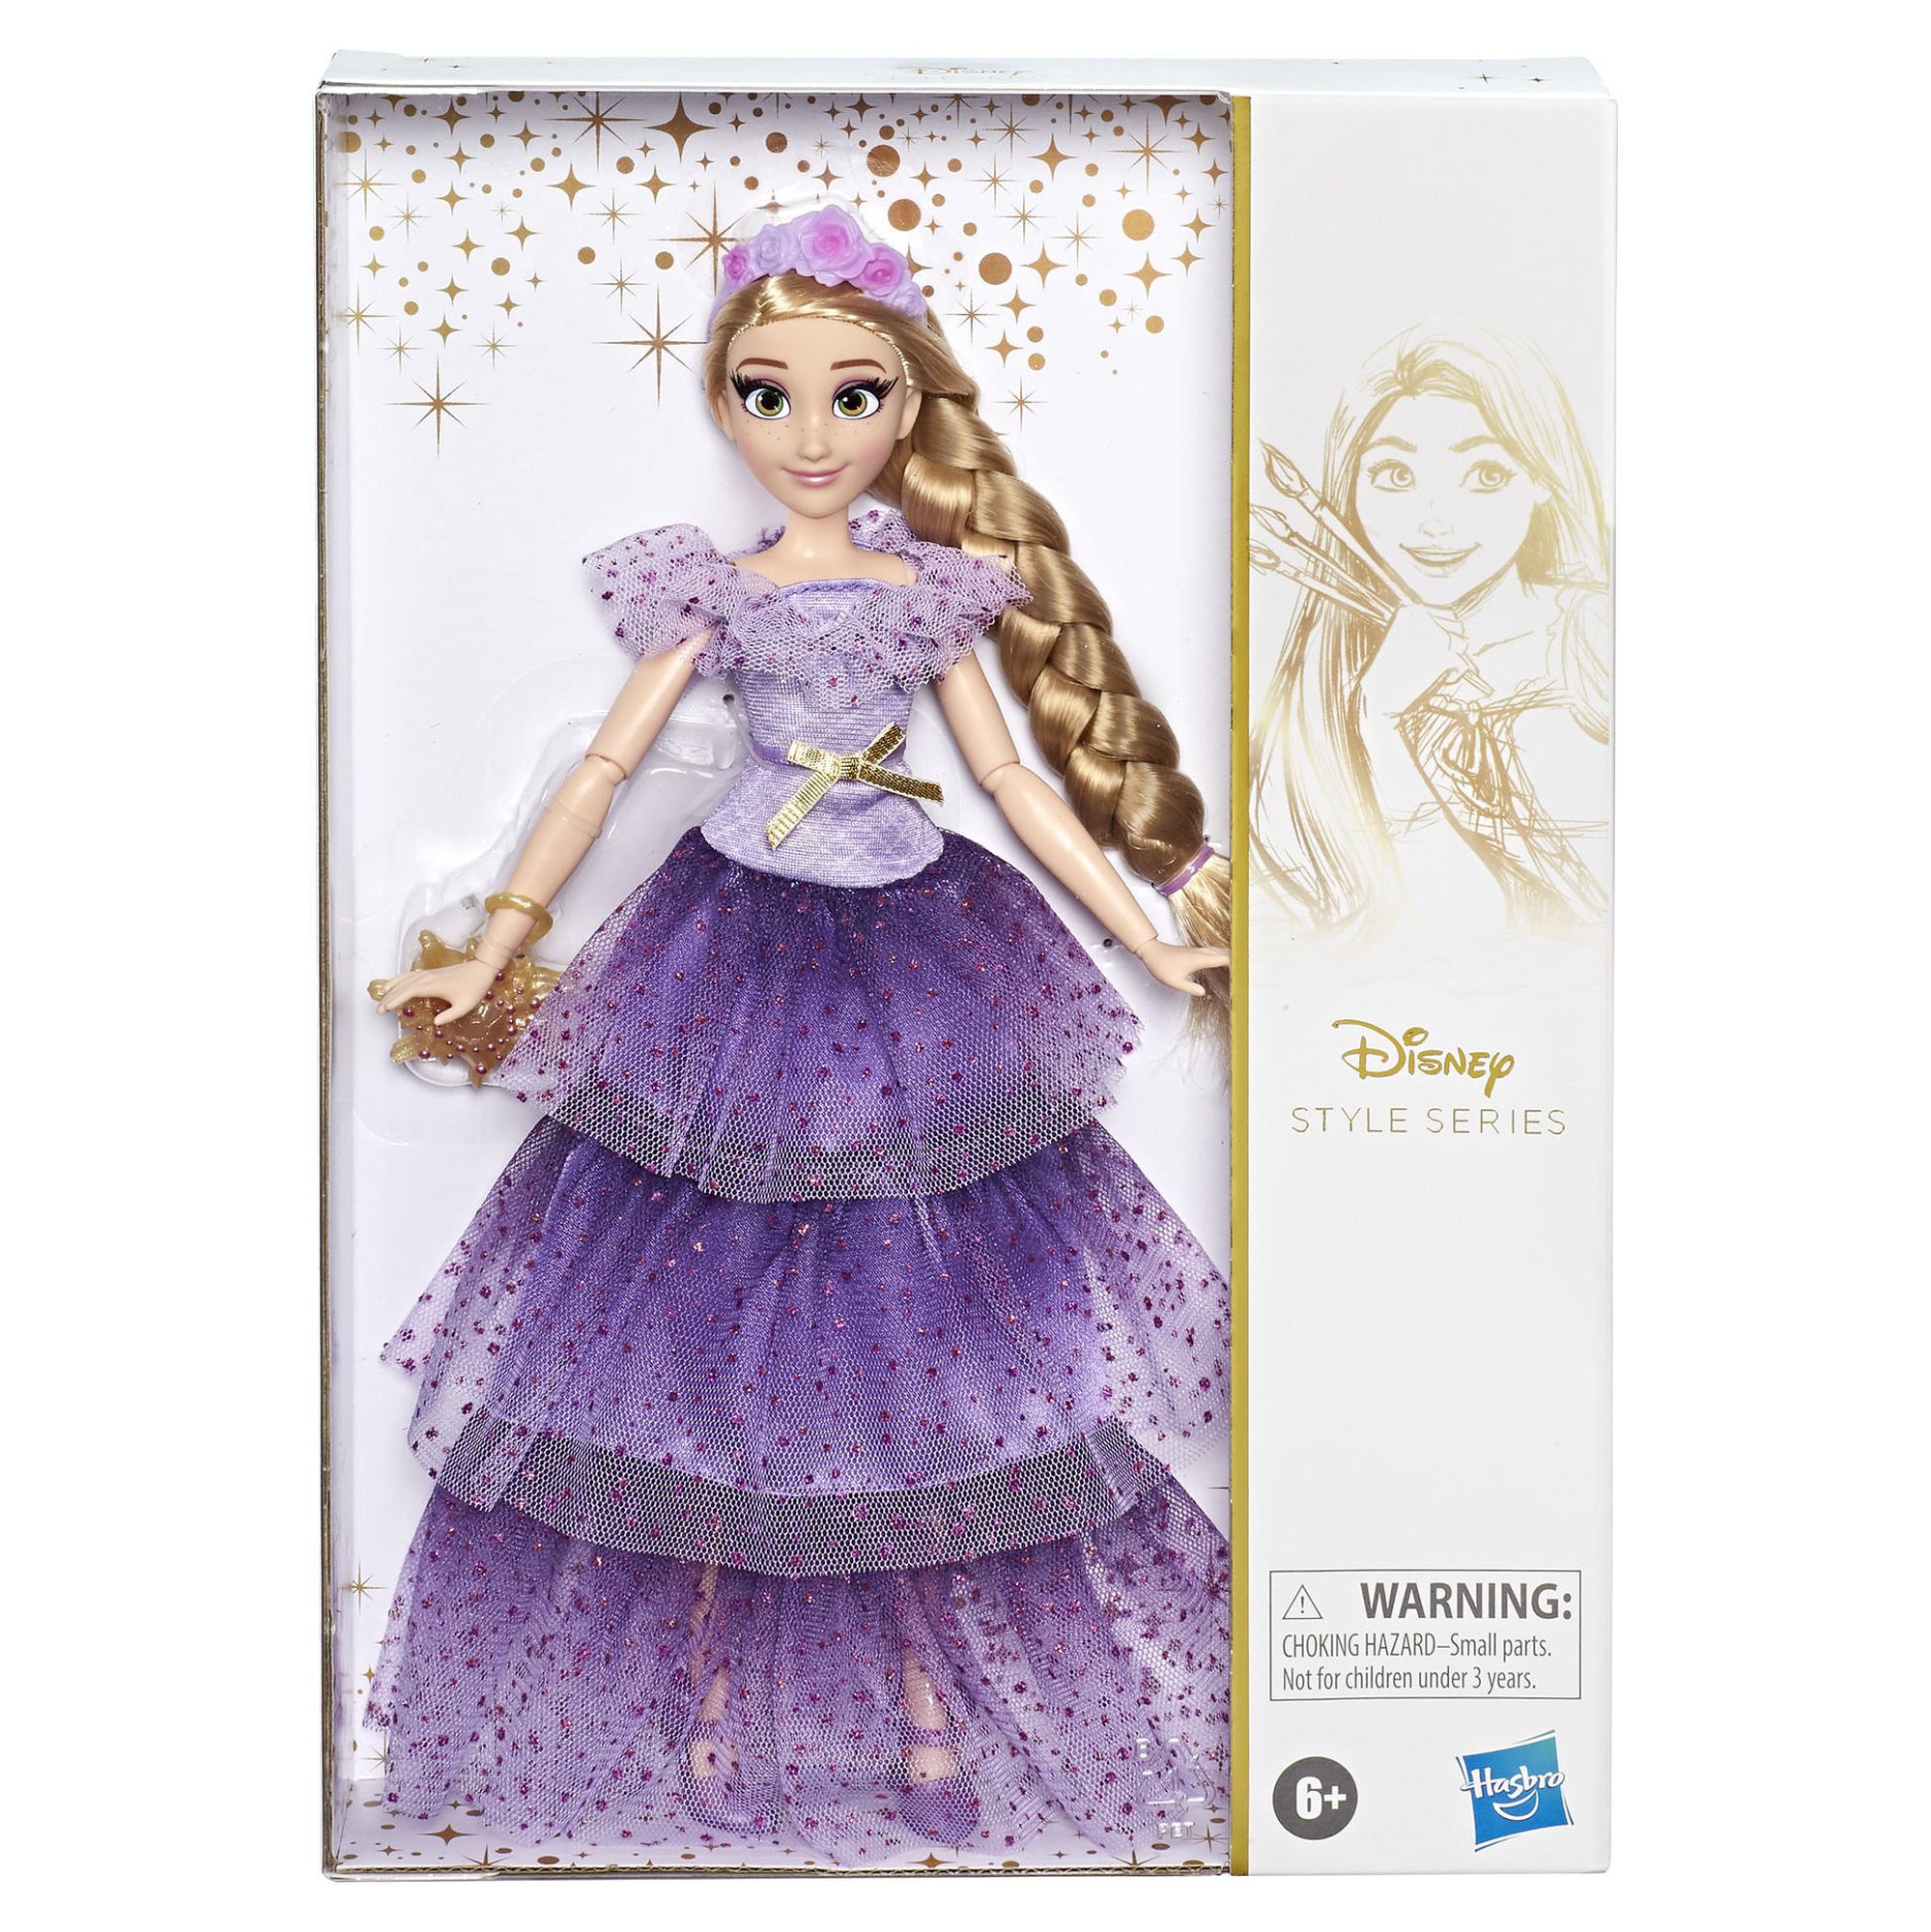 Disney Princess Style Series Rapunzel Doll W Ith Headband, Purse, Shoes - image 2 of 15